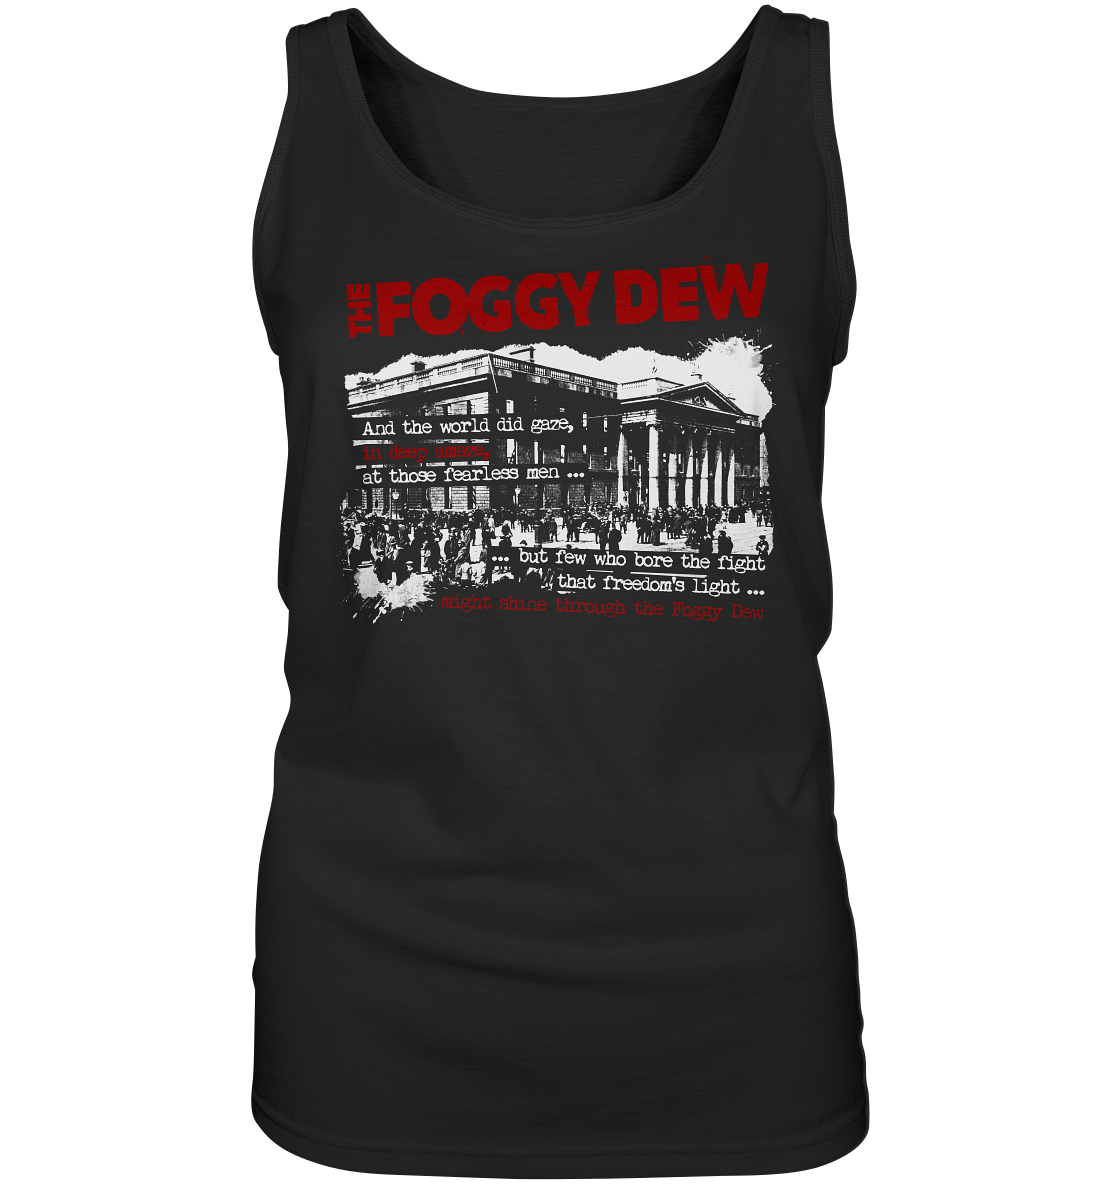 The Foggy Dew - Ladies Tank-Top